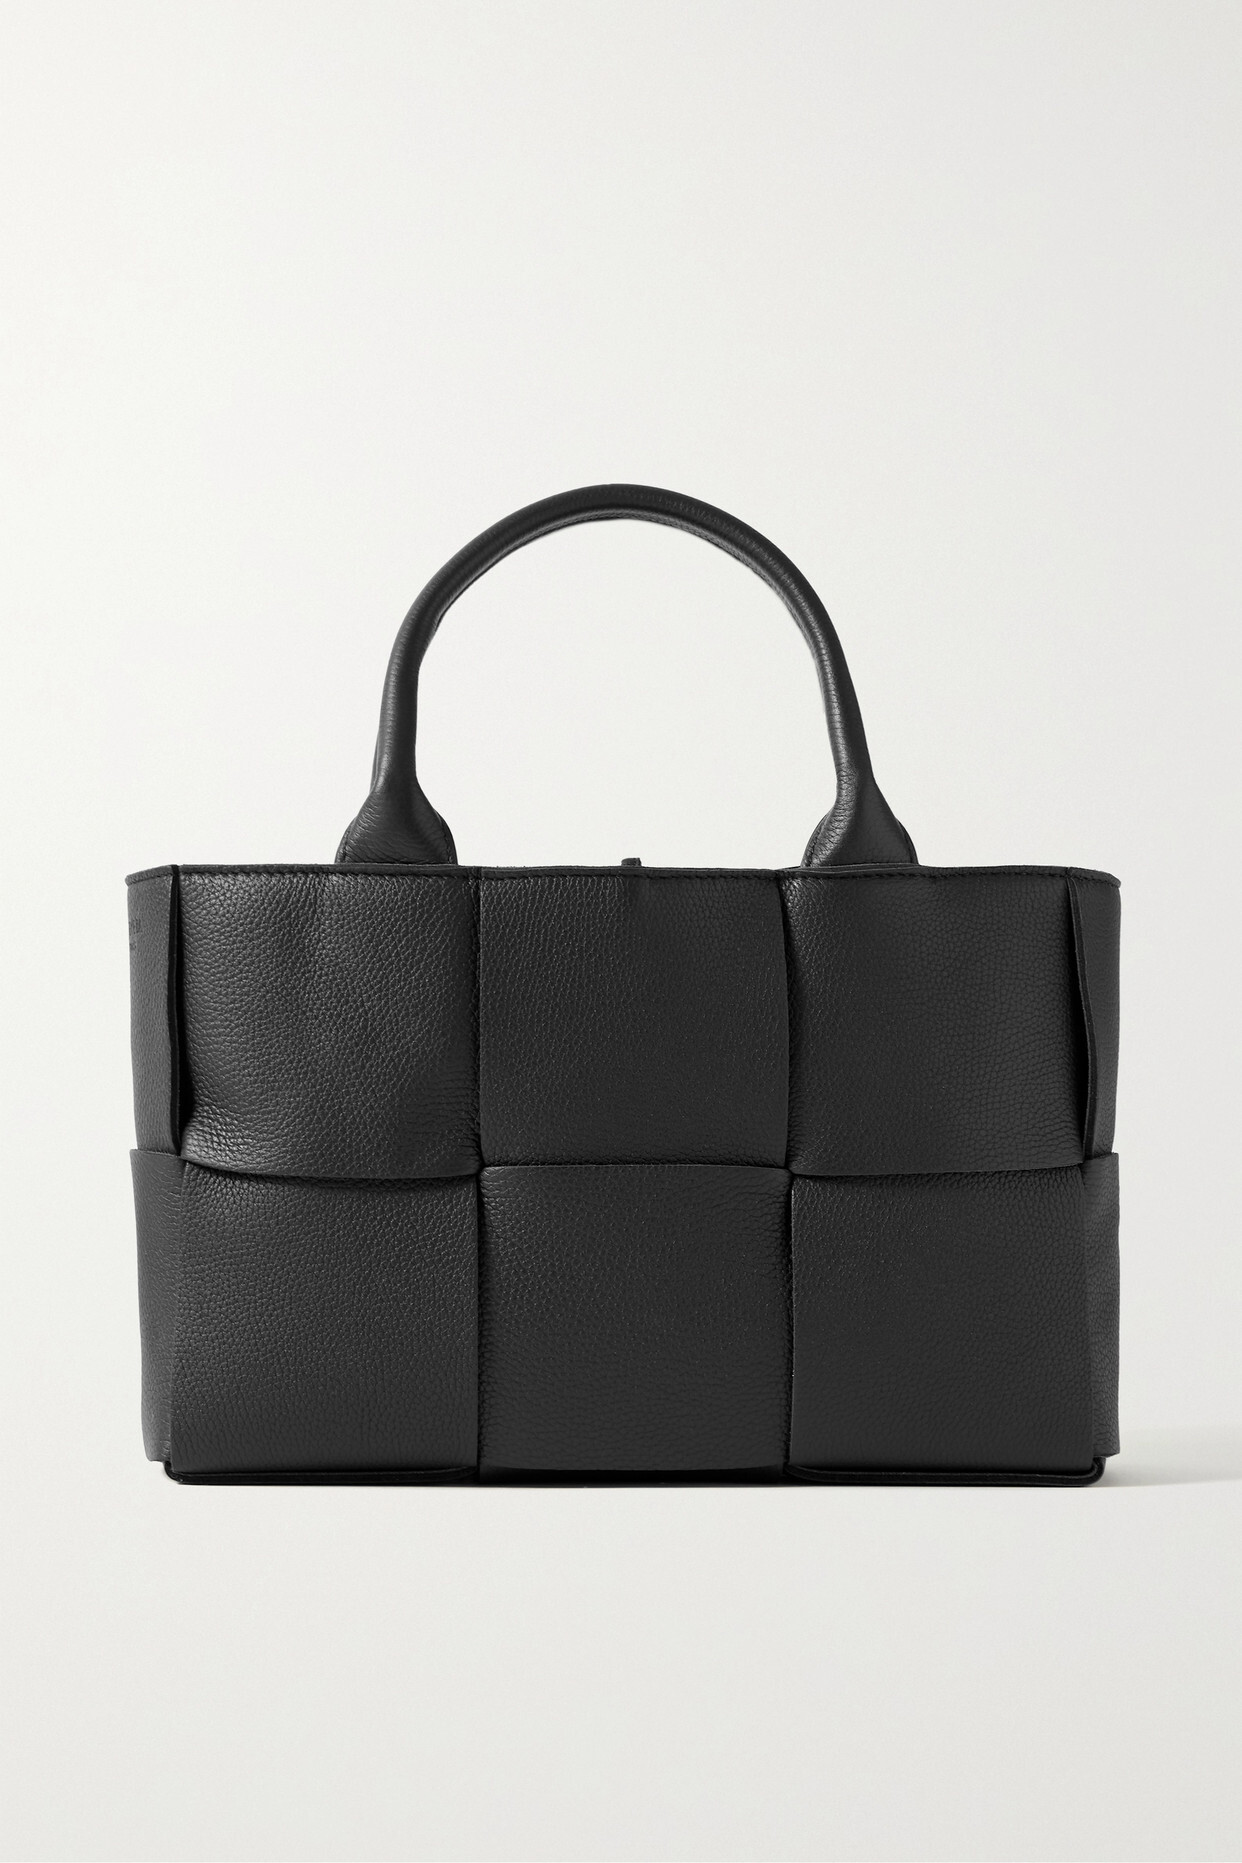 Bottega Veneta - Arco Mini Intrecciato Textured-leather Tote - Black